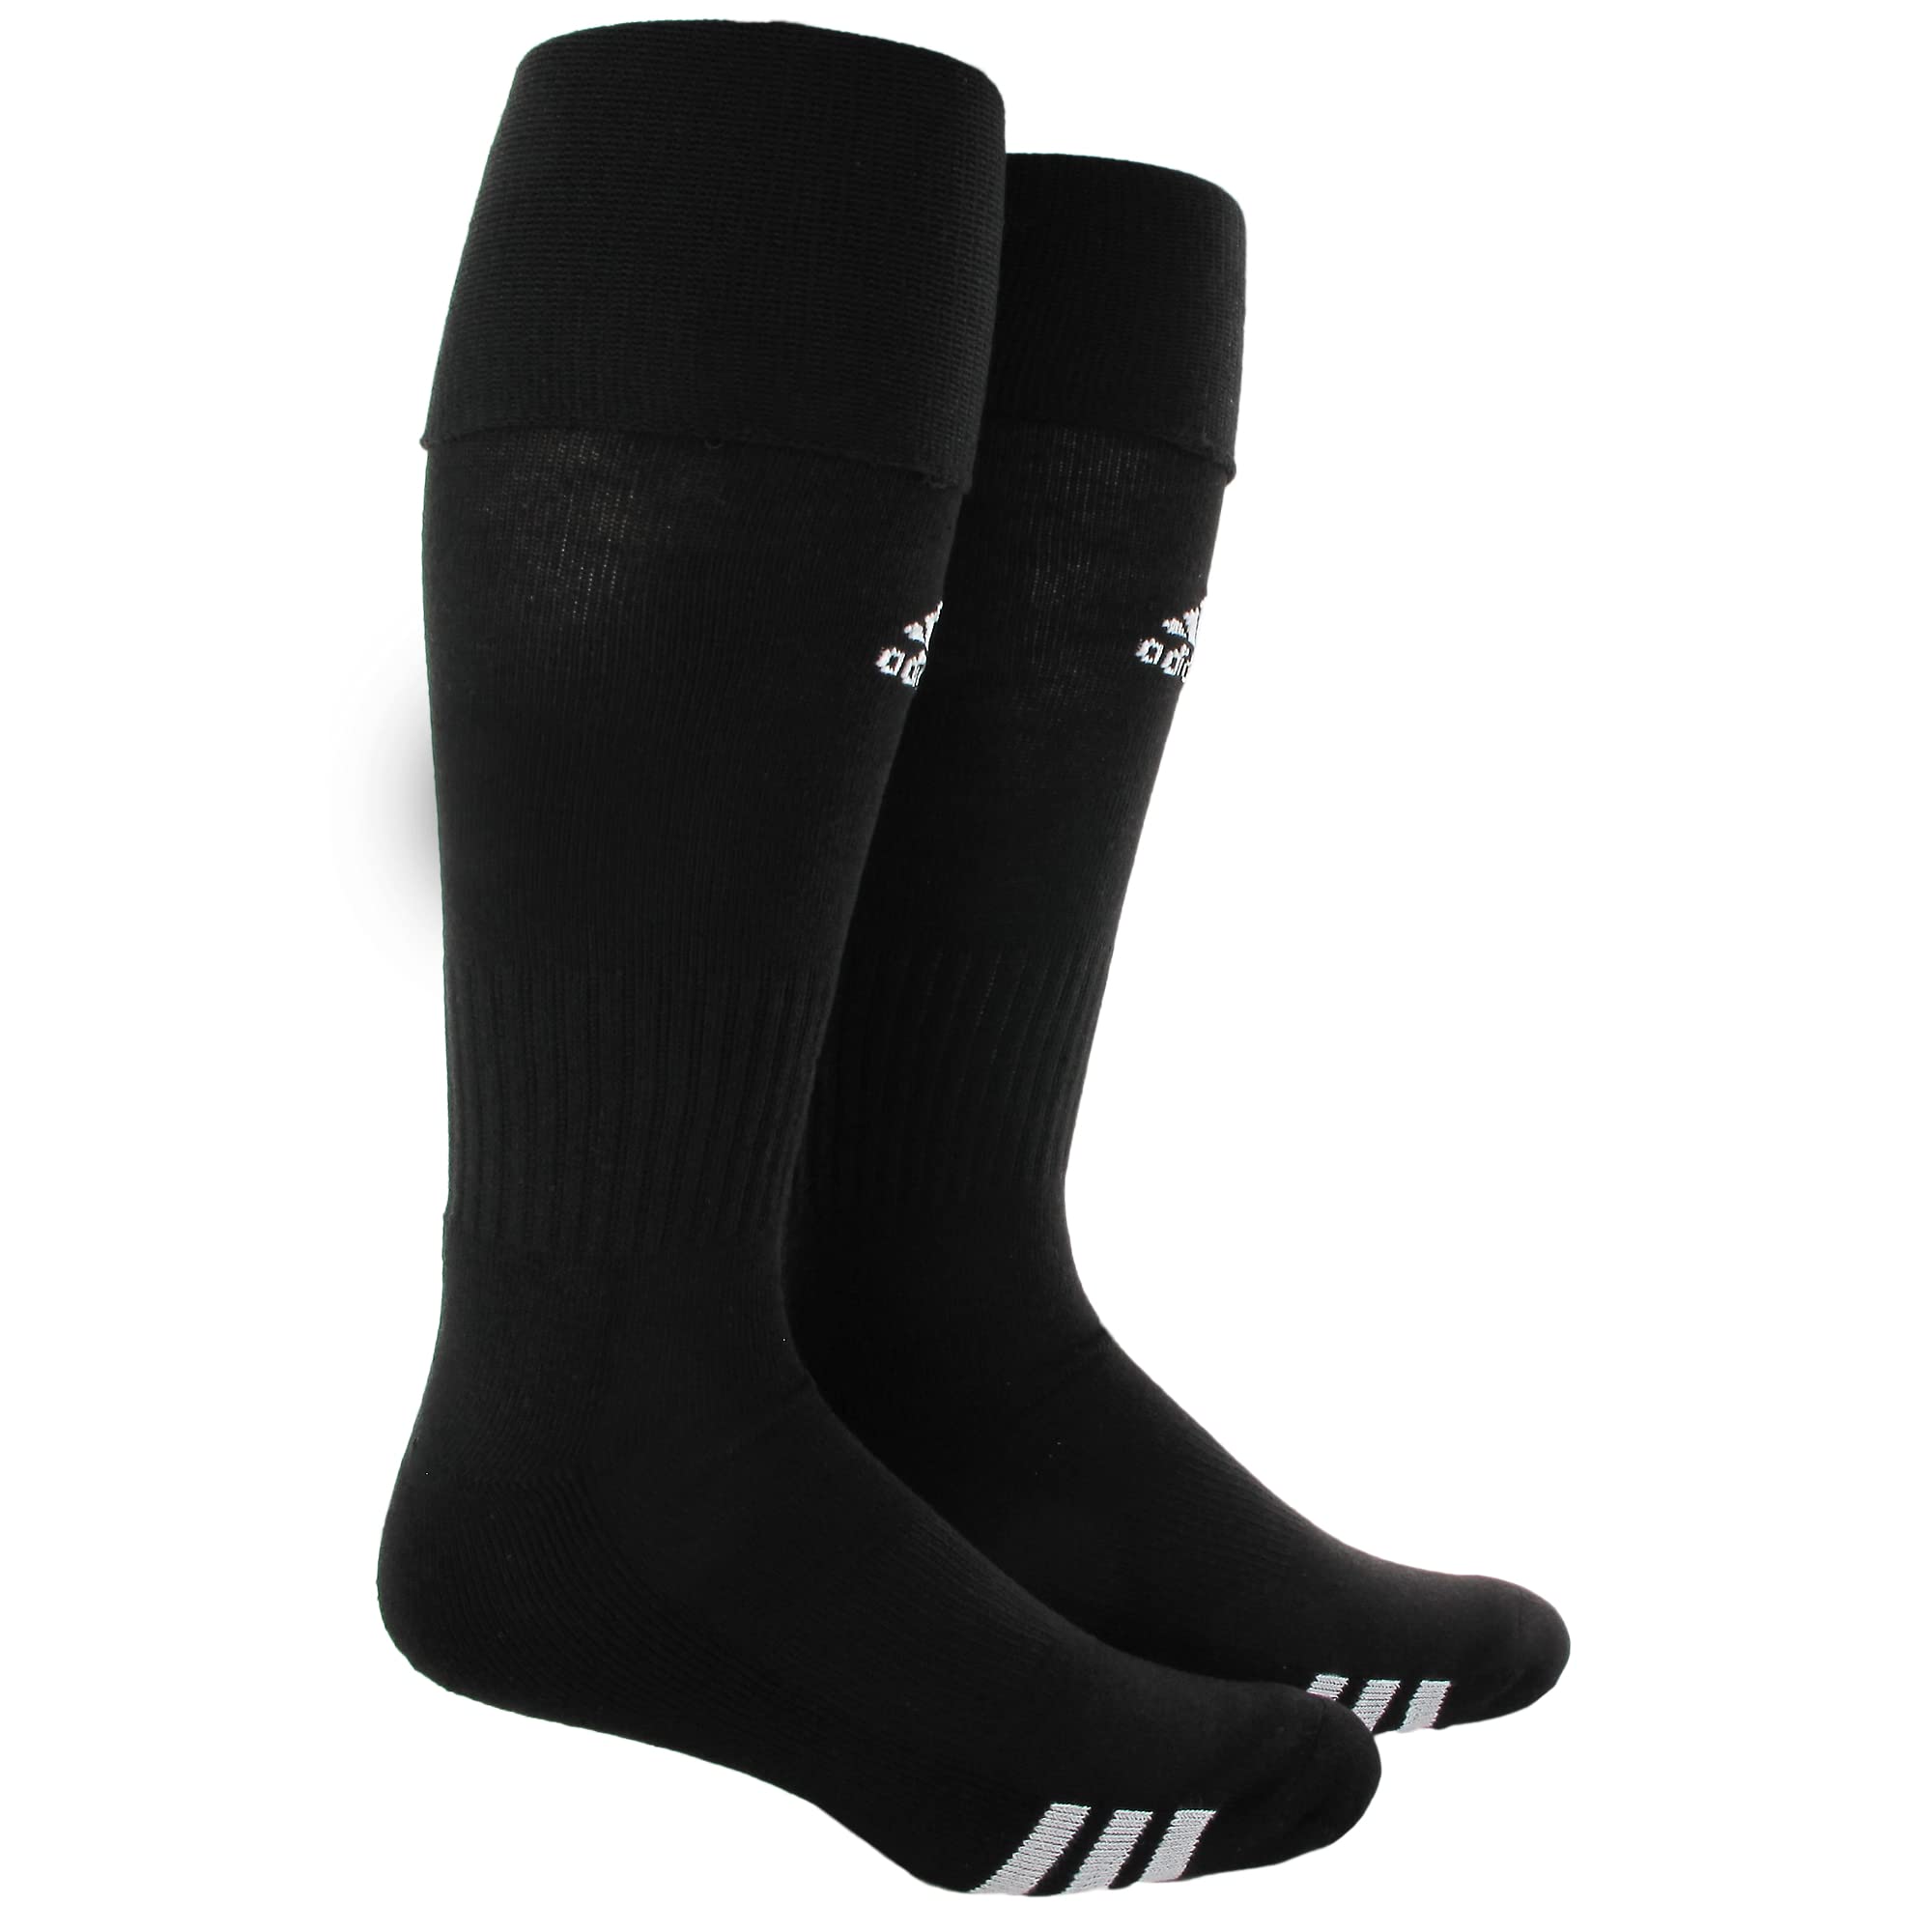 Adidas-Rivalry-Soccer-Sock